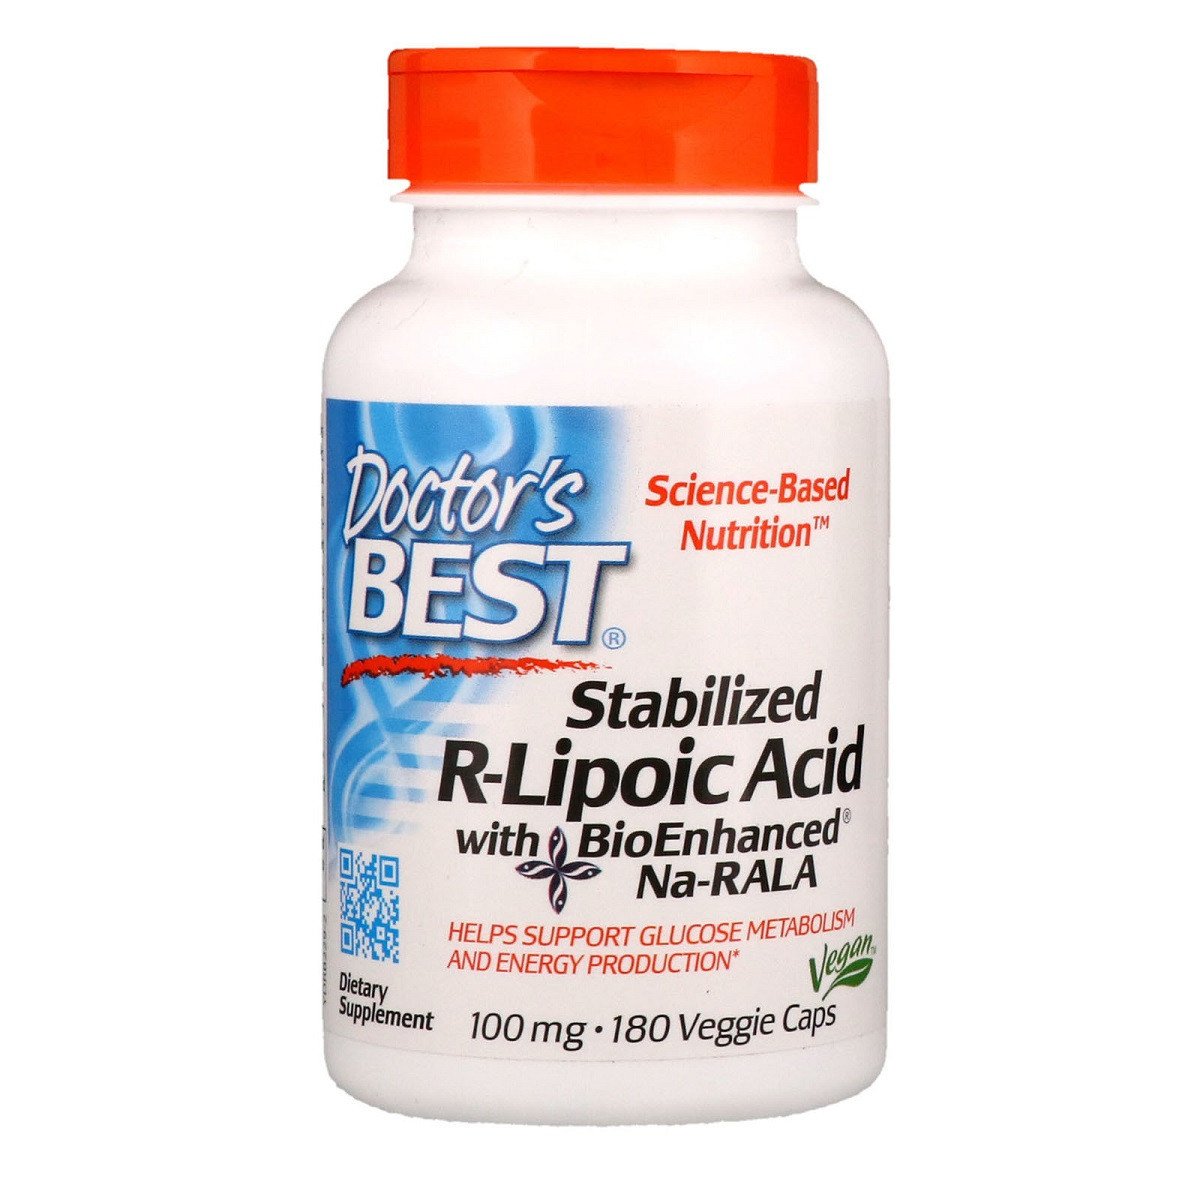 Doctor's BEST R-Липоевая Кислота, R-Lipoic Acid, Doctor's Best, 100 мг, 180 капсул, , 